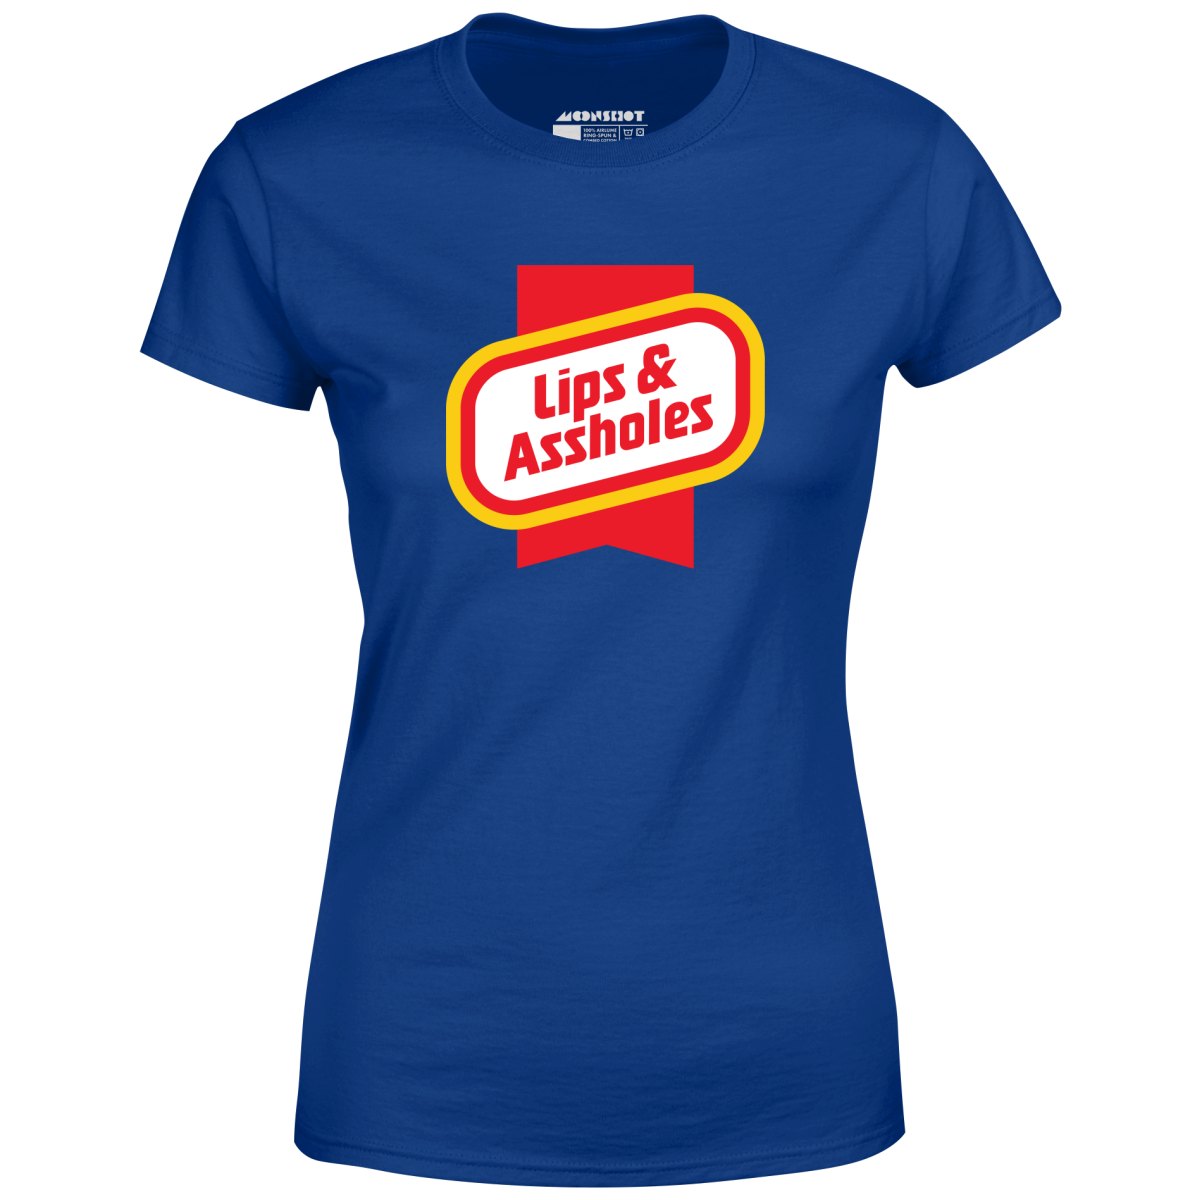 Lips & Assholes - Women's T-Shirt